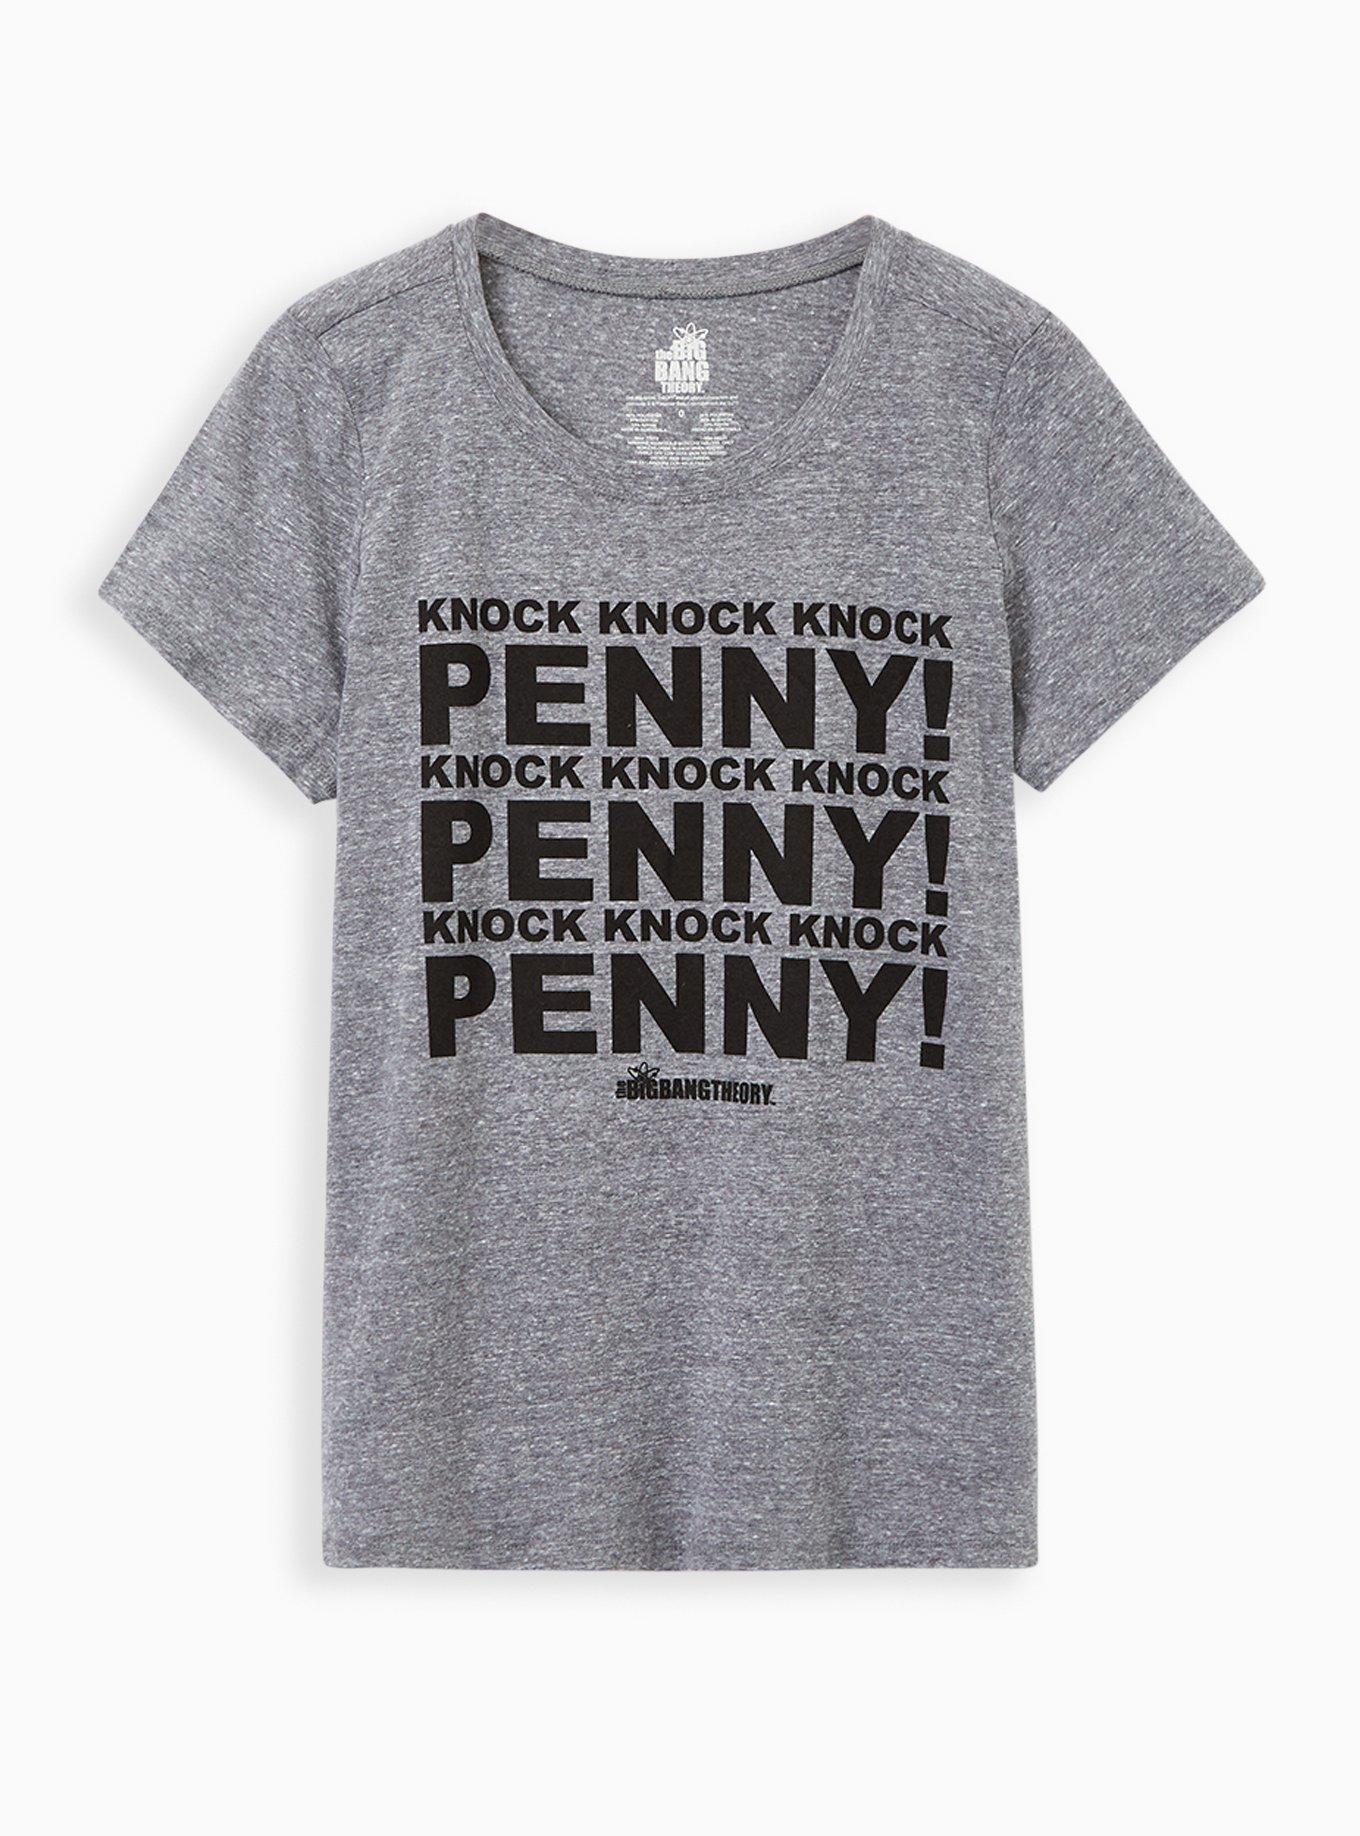 Penny classic leggings (PDF)